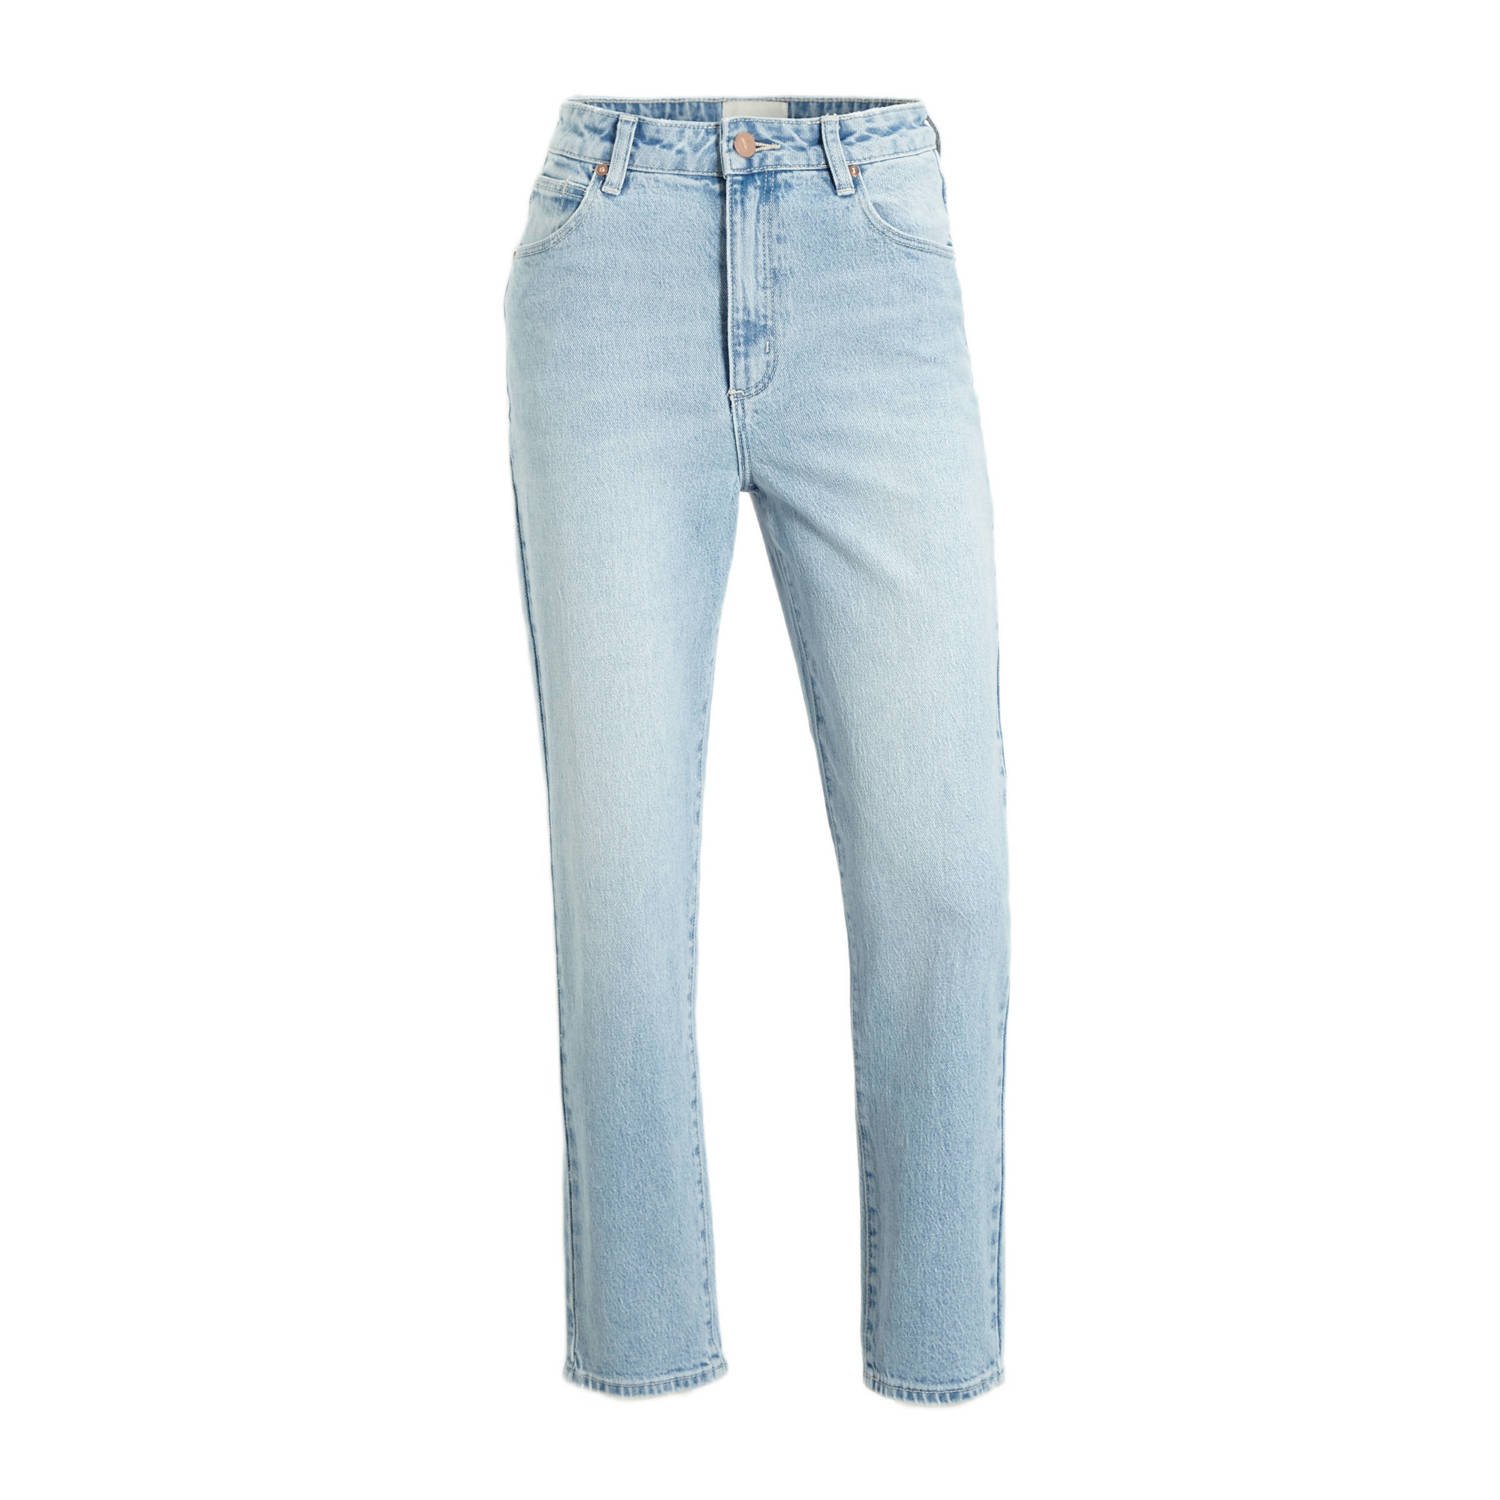 Abrand Jeans high waist slim fit jeans 94 Gina light blue denim